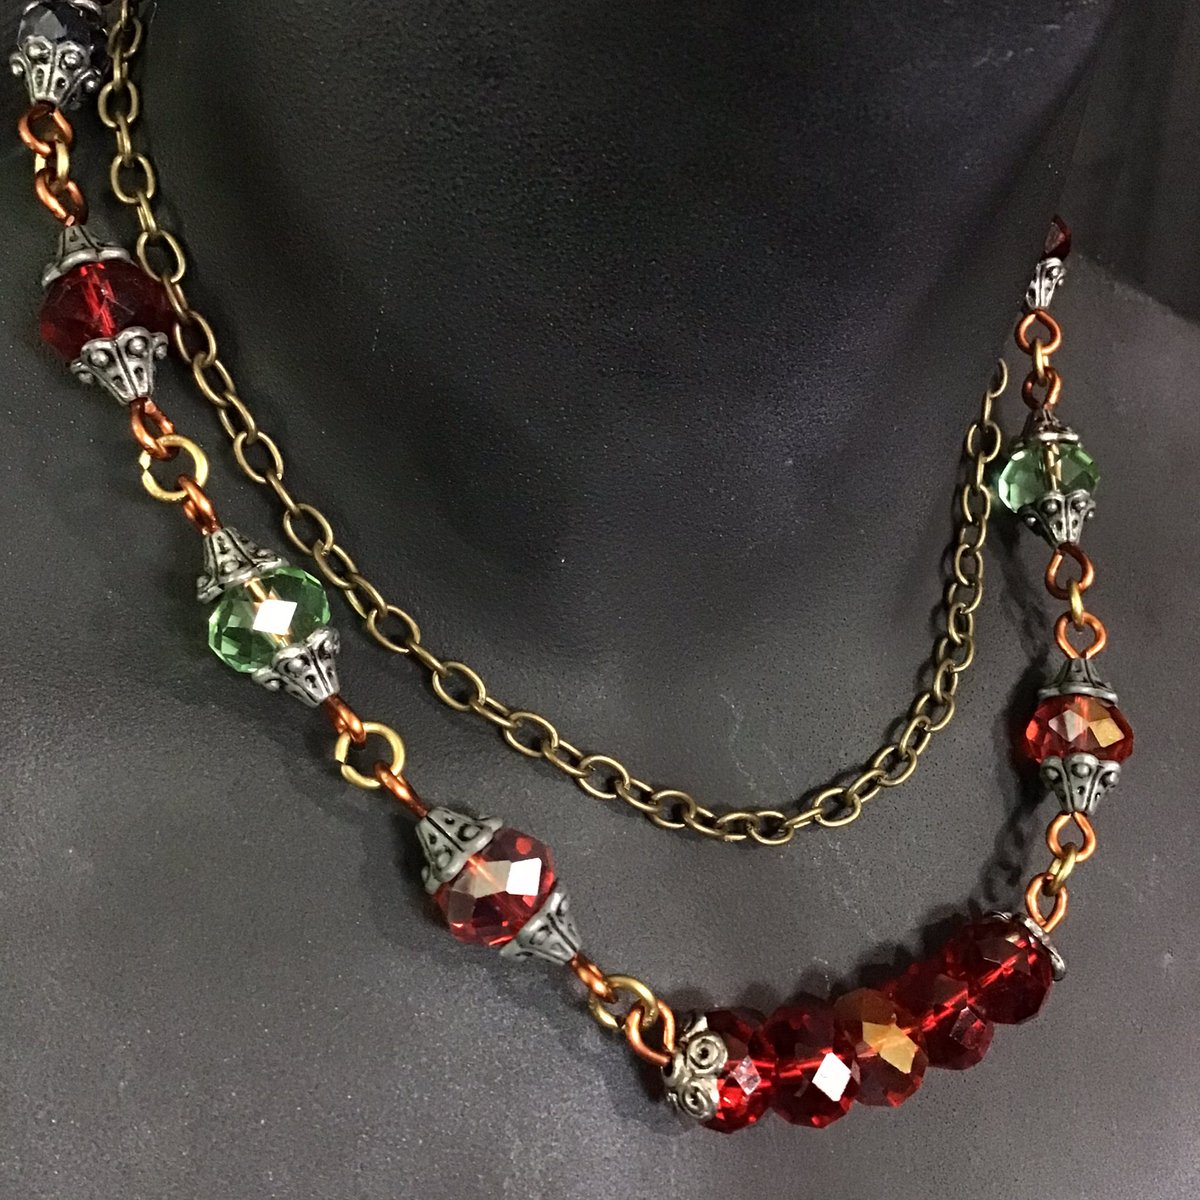 🌫️HANDMADE BEAD AND CHAIN NECKLACE🌫️To Purchase🫧 #HitTheLinkInMyBio #Beads #HandmadeJewelry #Jewelry #MichaelsMakerPlace